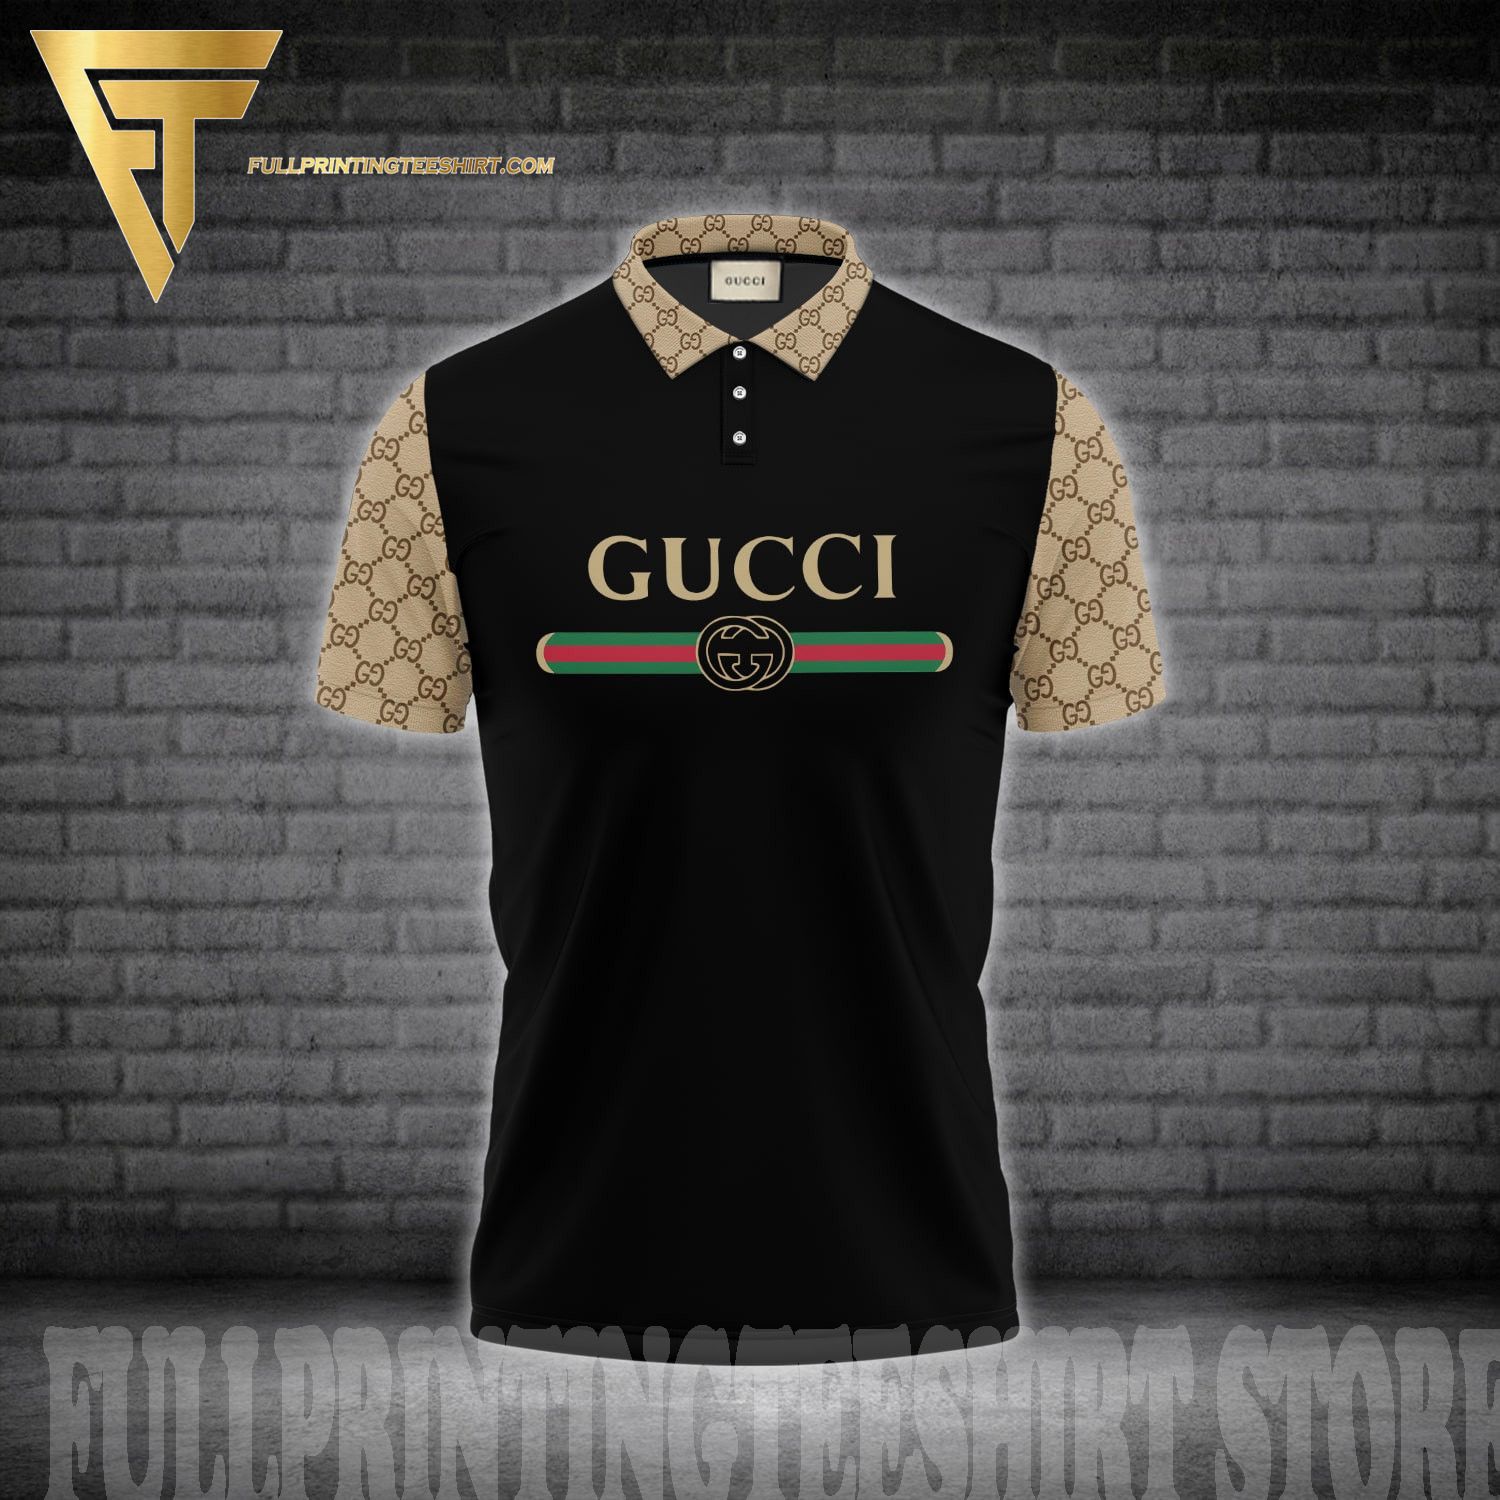 Gucci GUCCI POLO SHIRT MONOGRAM GG VINTAGE RARE Luxery